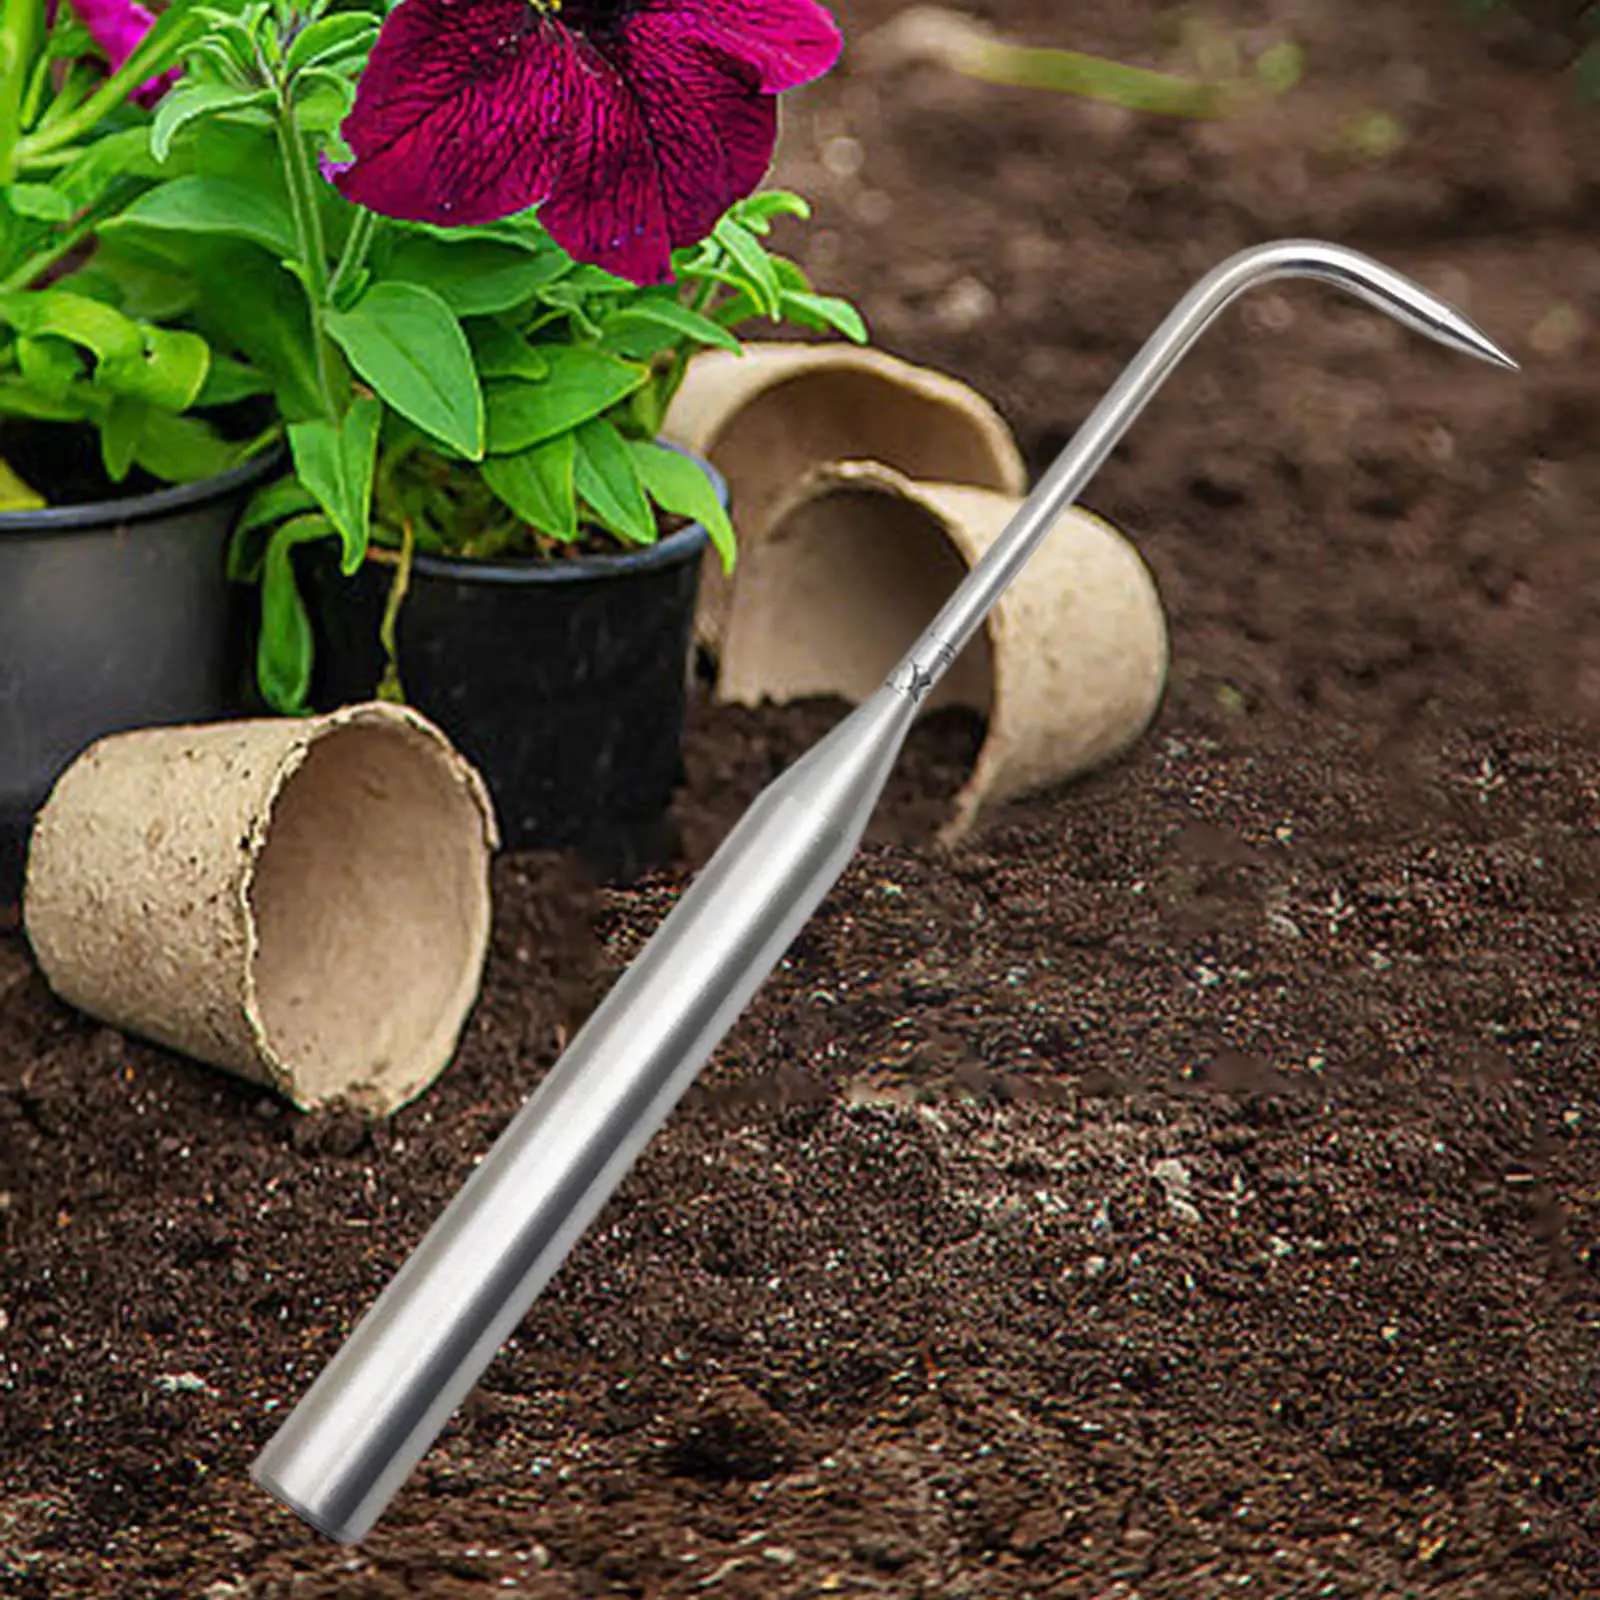 Garden Weeding Tool Stainless Steel Comfortable Grip Patio Crack Weeder for Edging Soil Loosening Digging Gardening Sidewalk